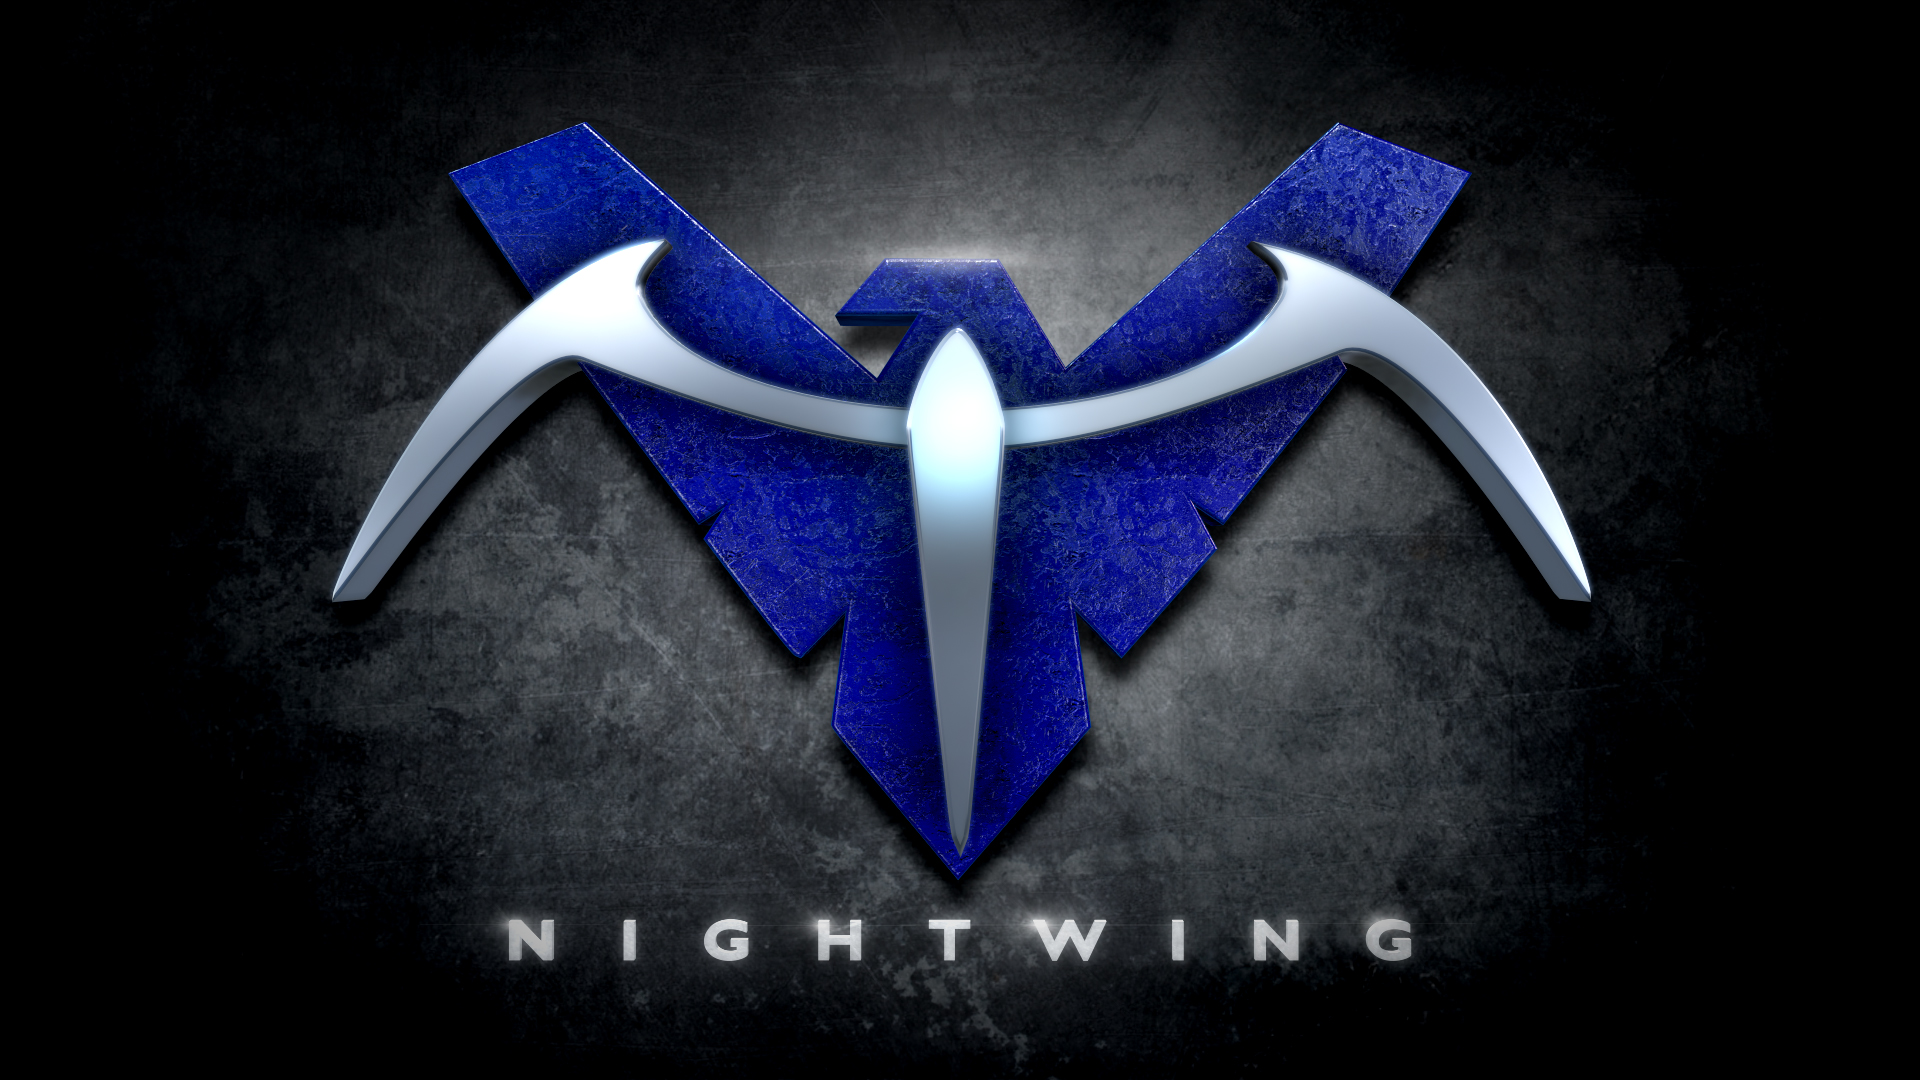 Nightwing Symbol Wallpaper Hd nightwing logo beloeil jones 1920x1080